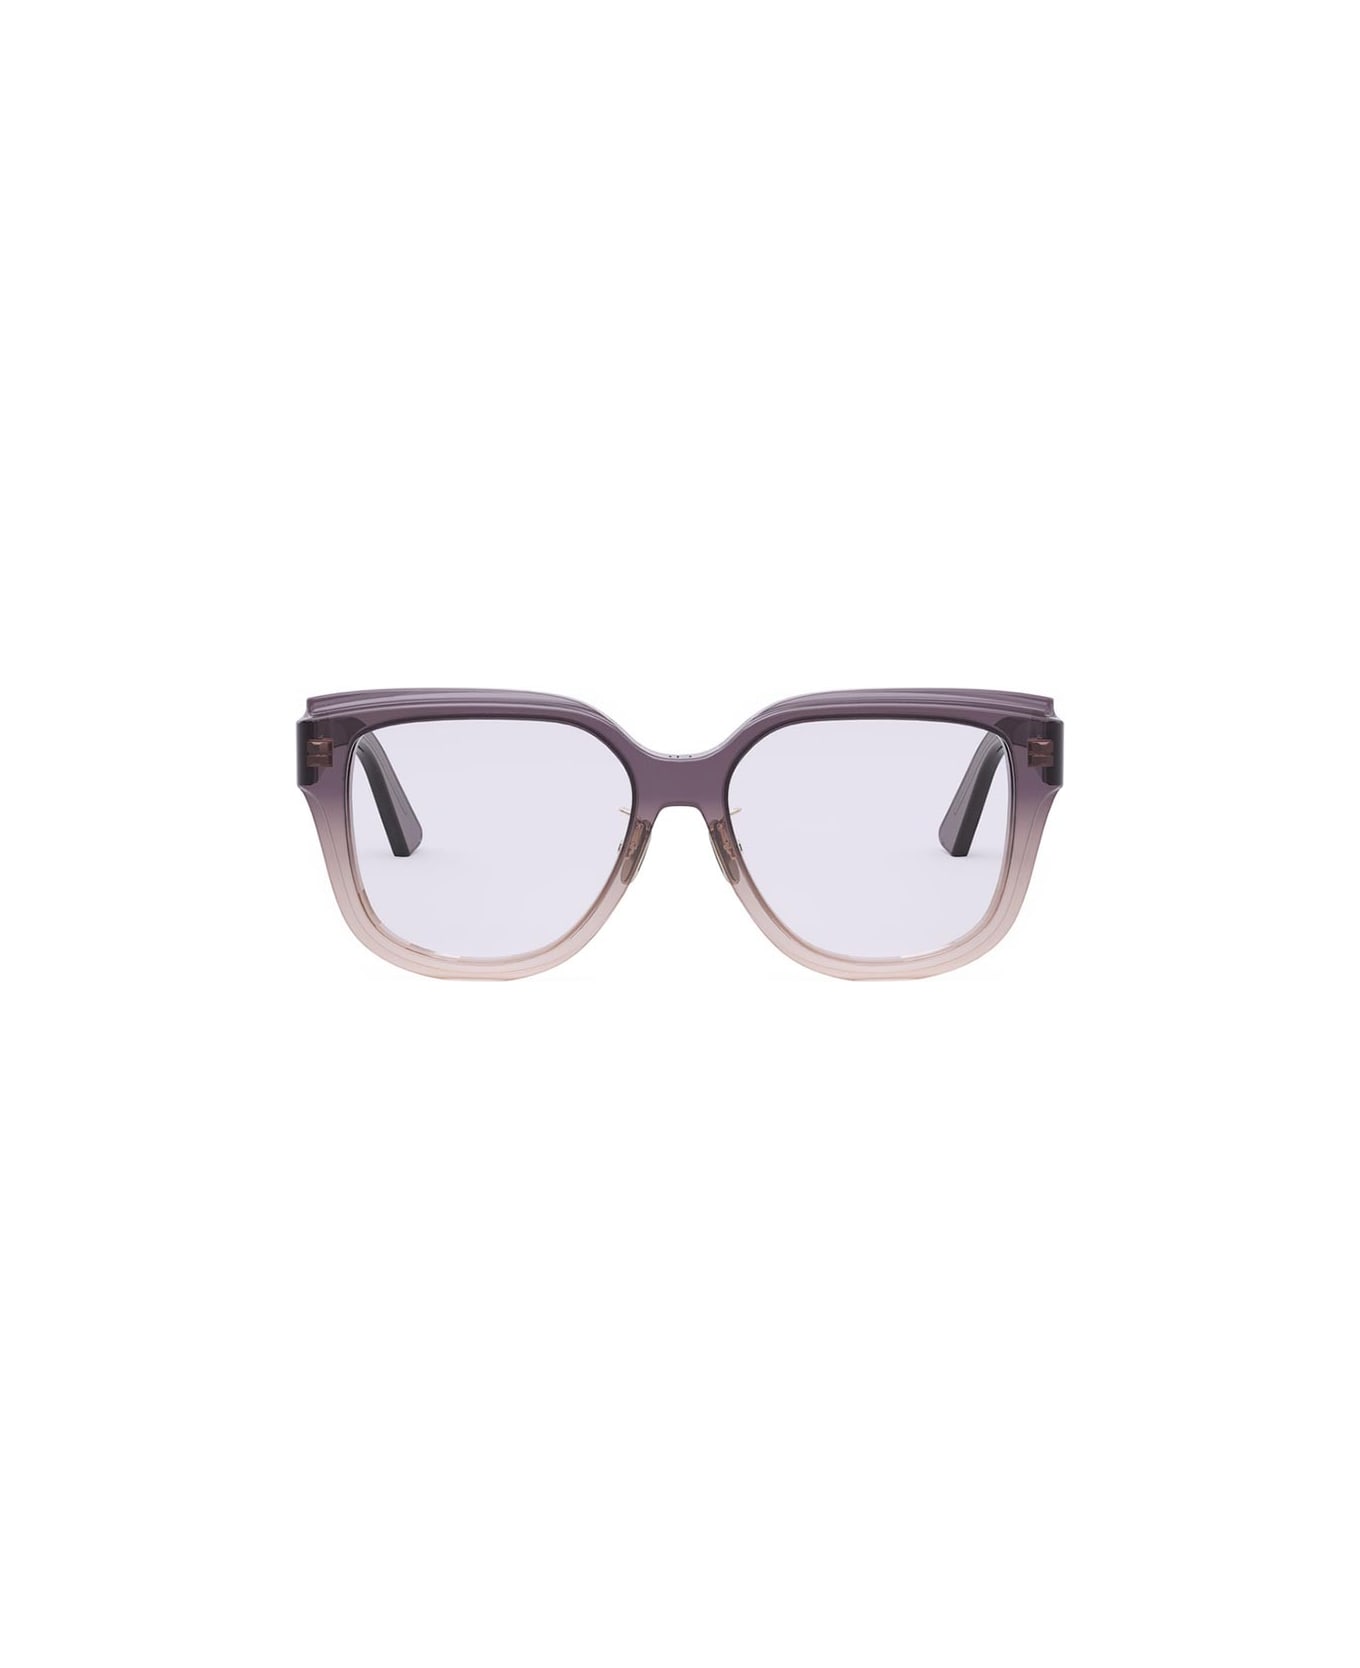 Dior Eyewear Glasses - Viola アイウェア